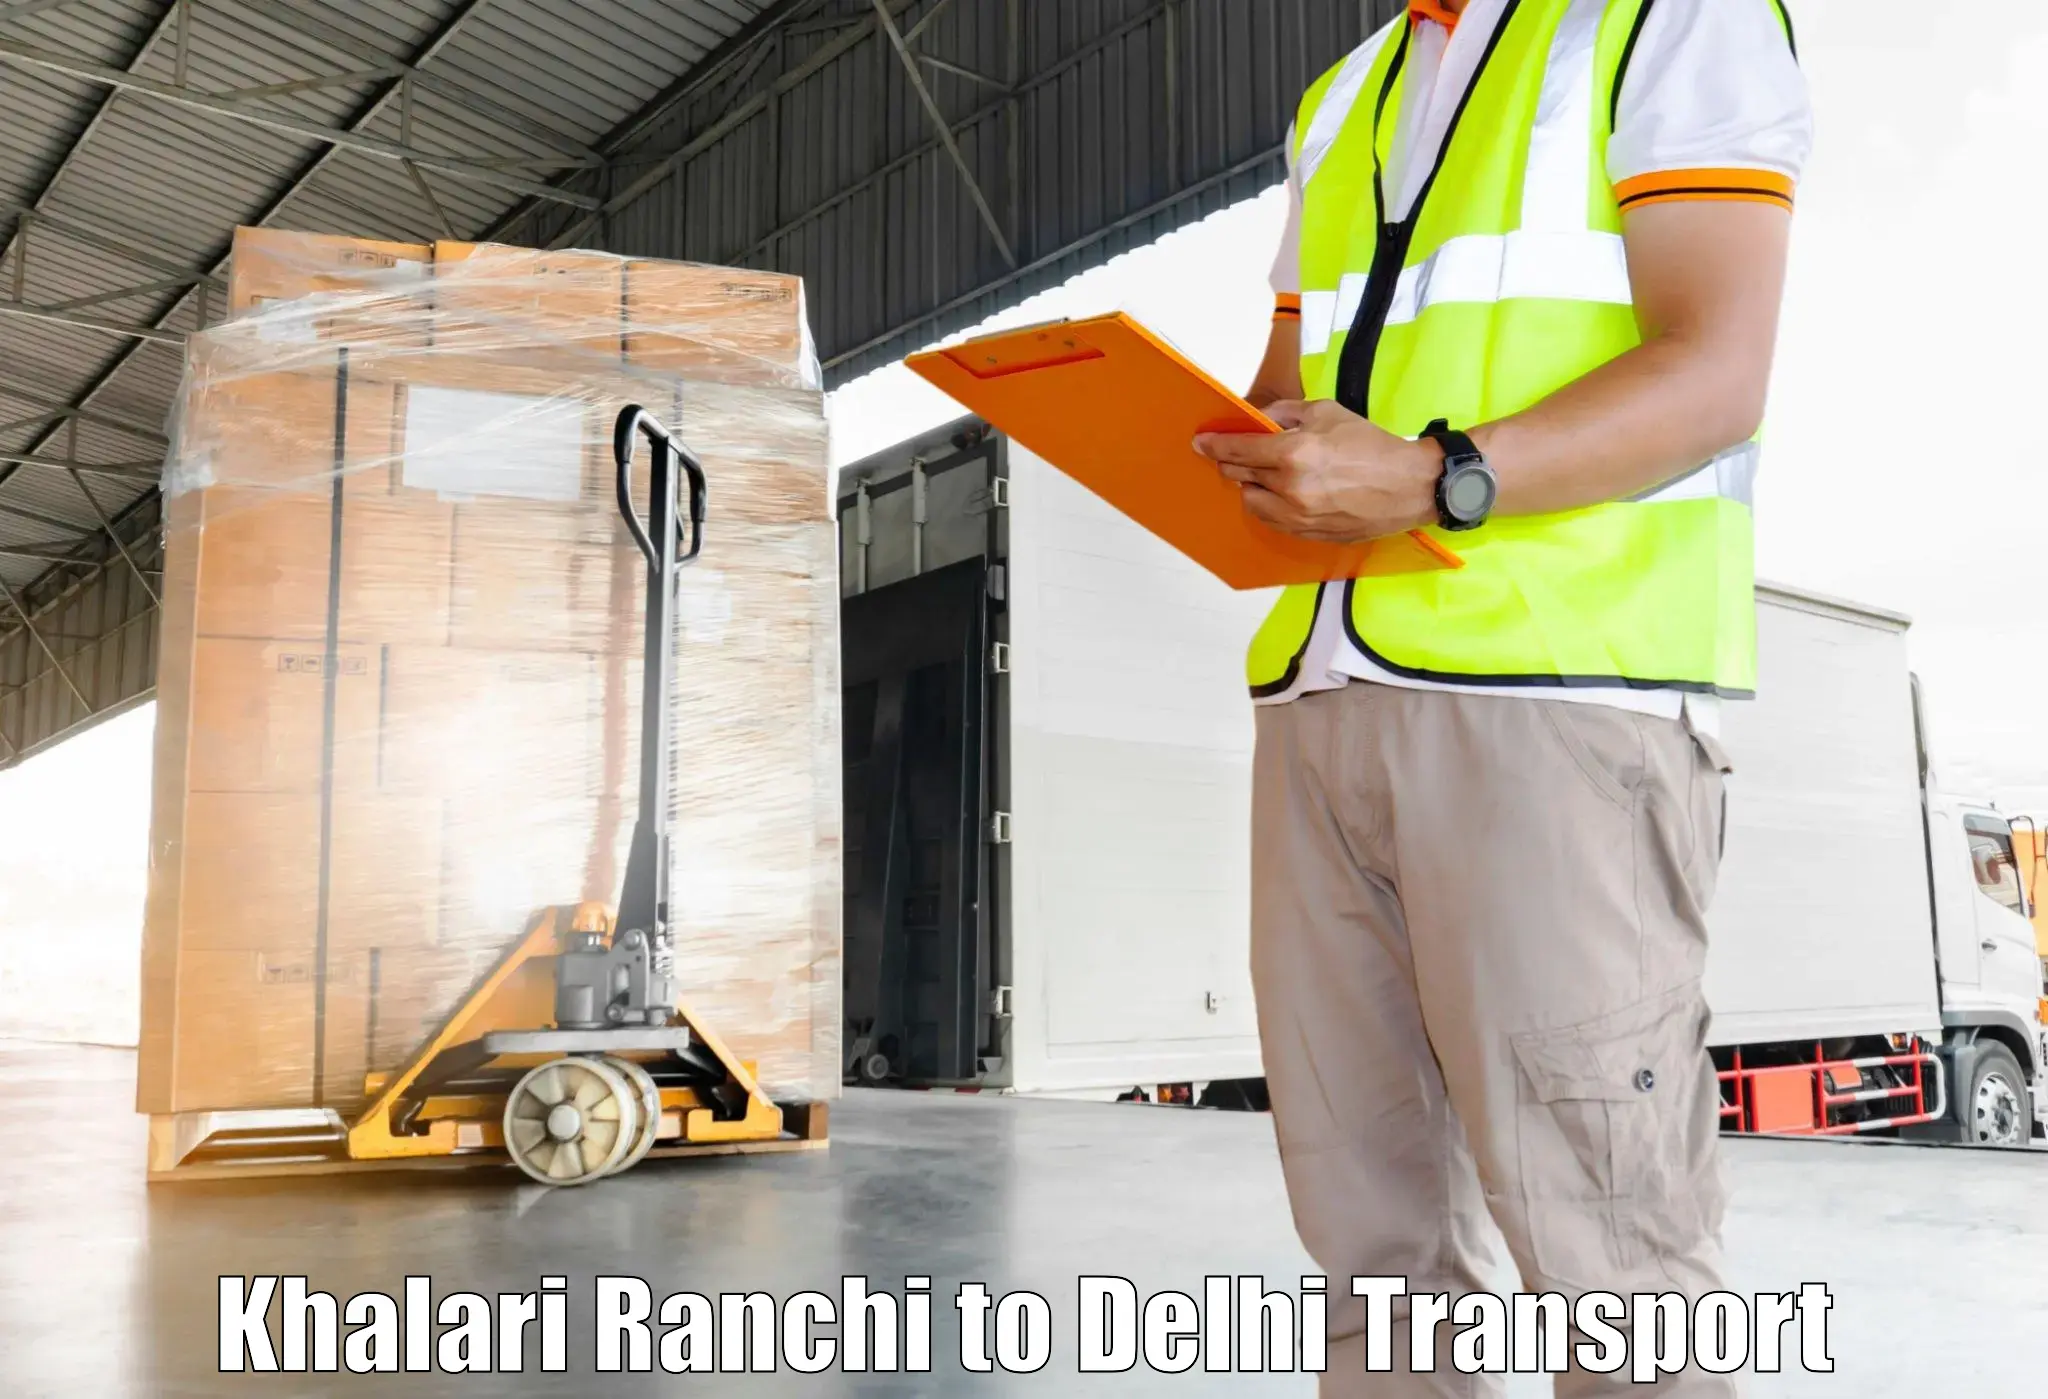 Pick up transport service Khalari Ranchi to NCR